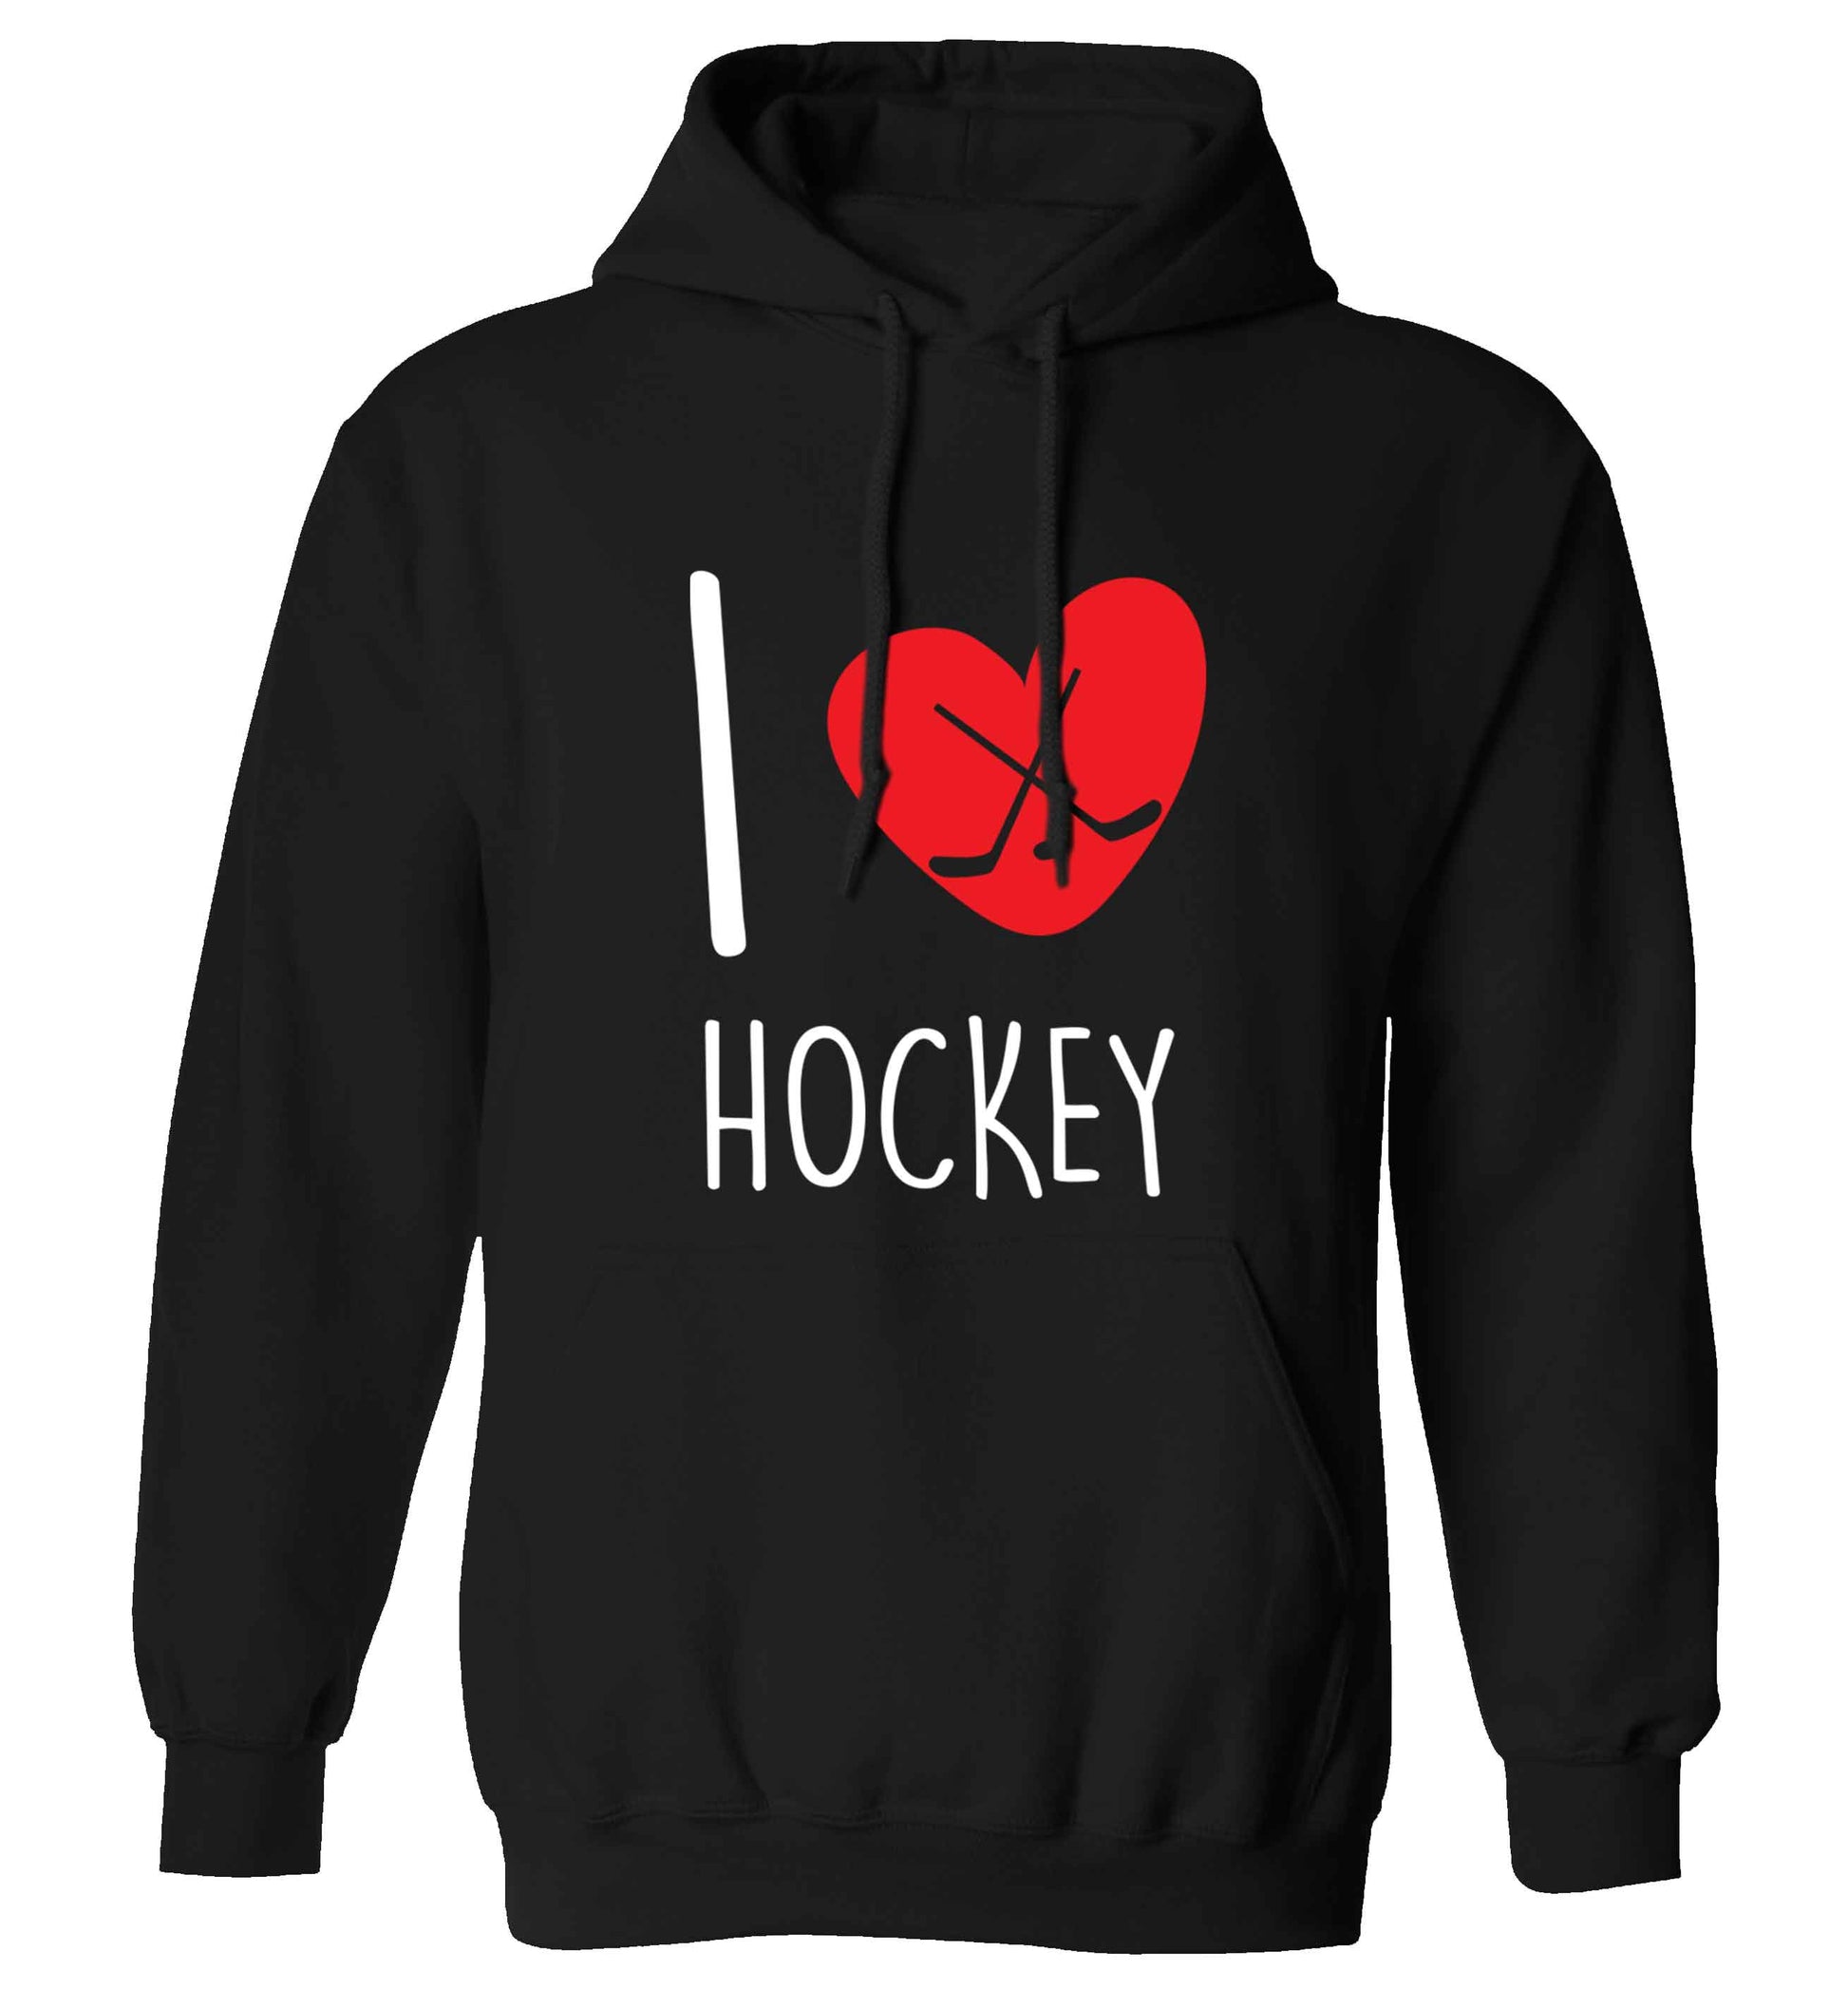 I love hockey adults unisex black hoodie 2XL